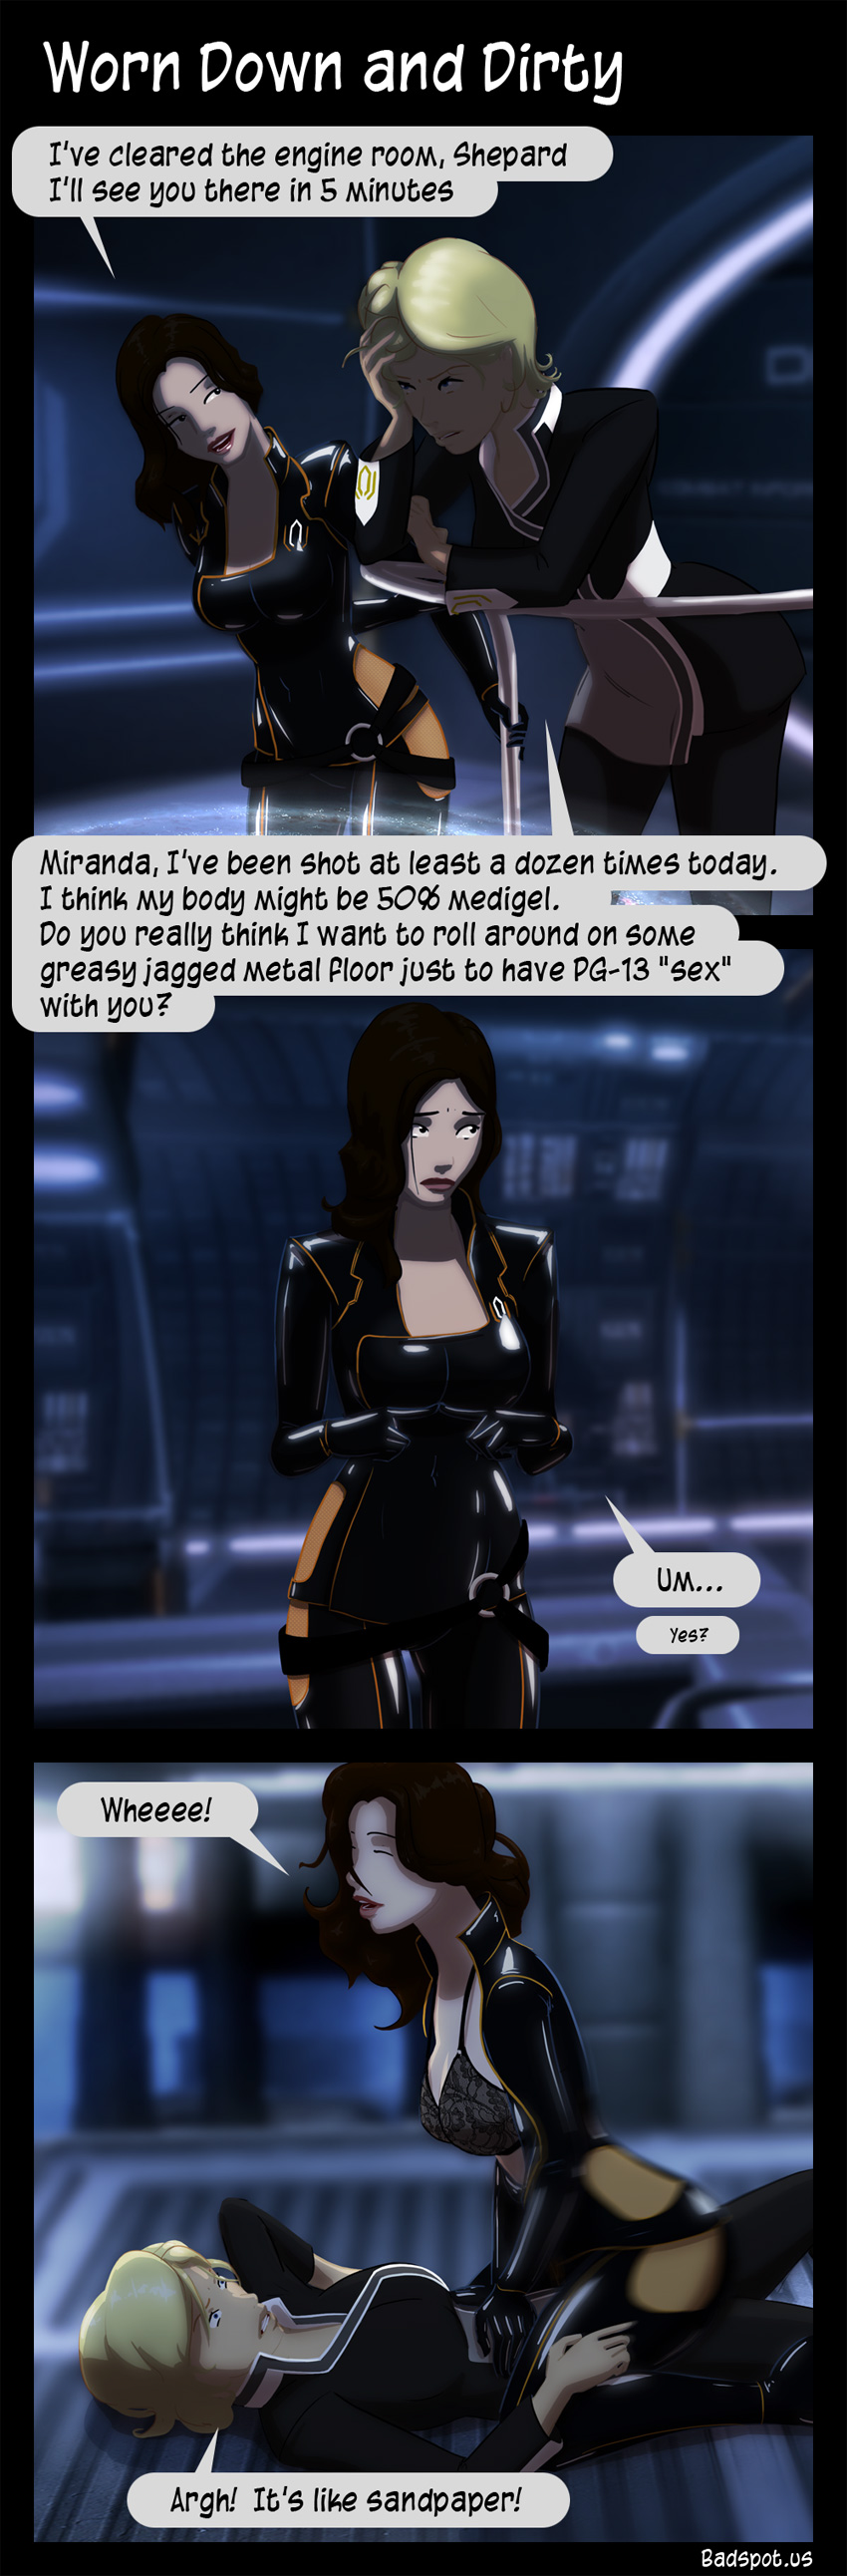 Mass-Effect-Comic-Worn-Down-and-Dirty.jpg